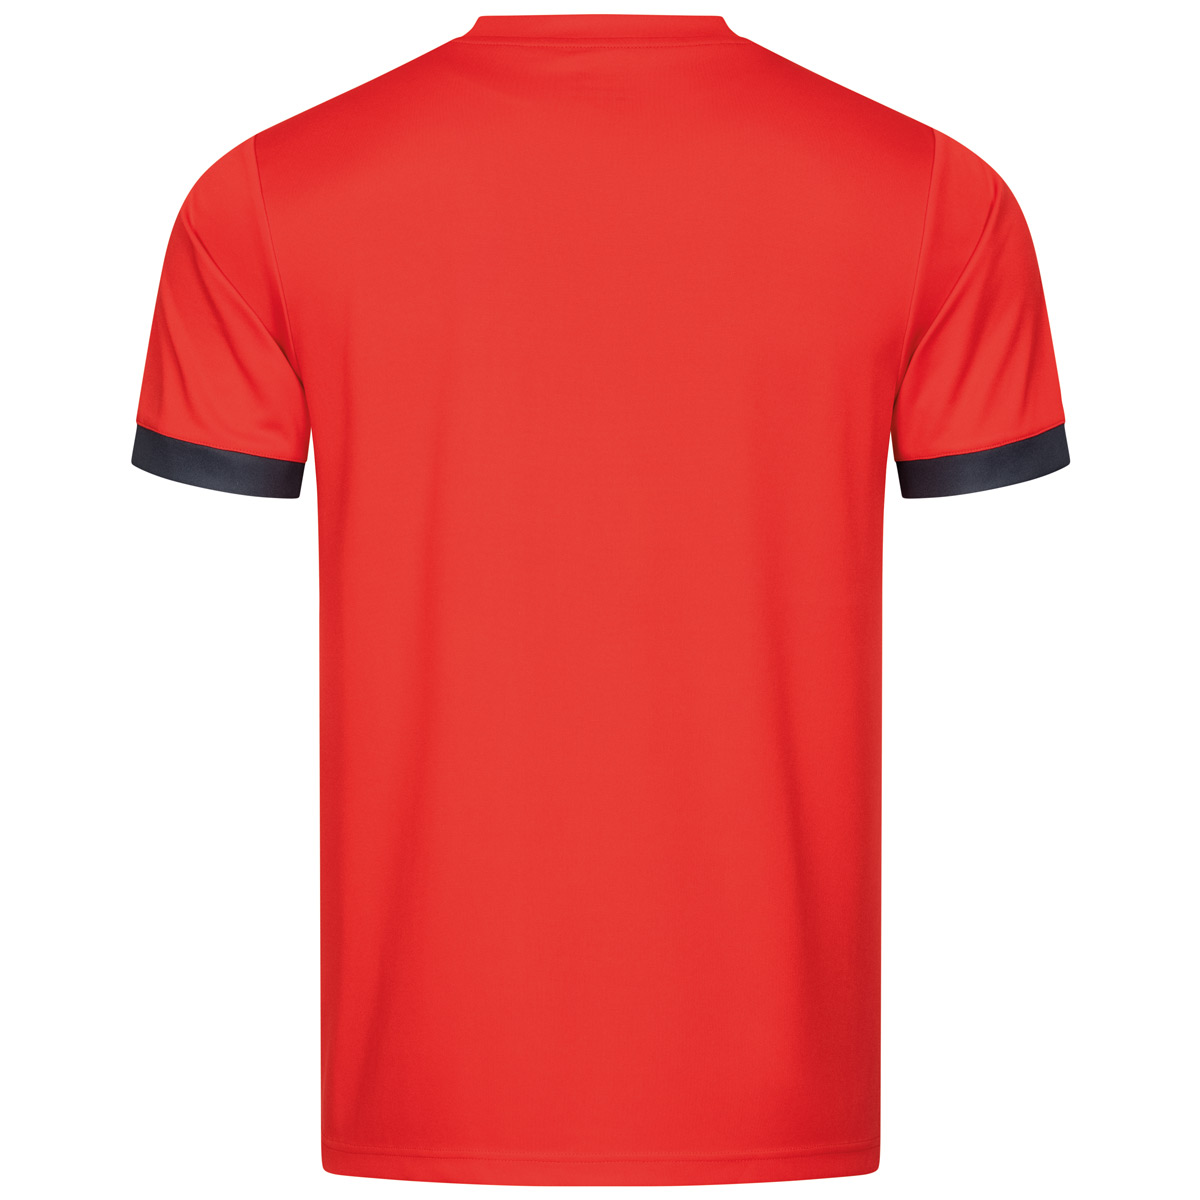 Donic T-Shirt Nova rot/schwarz S